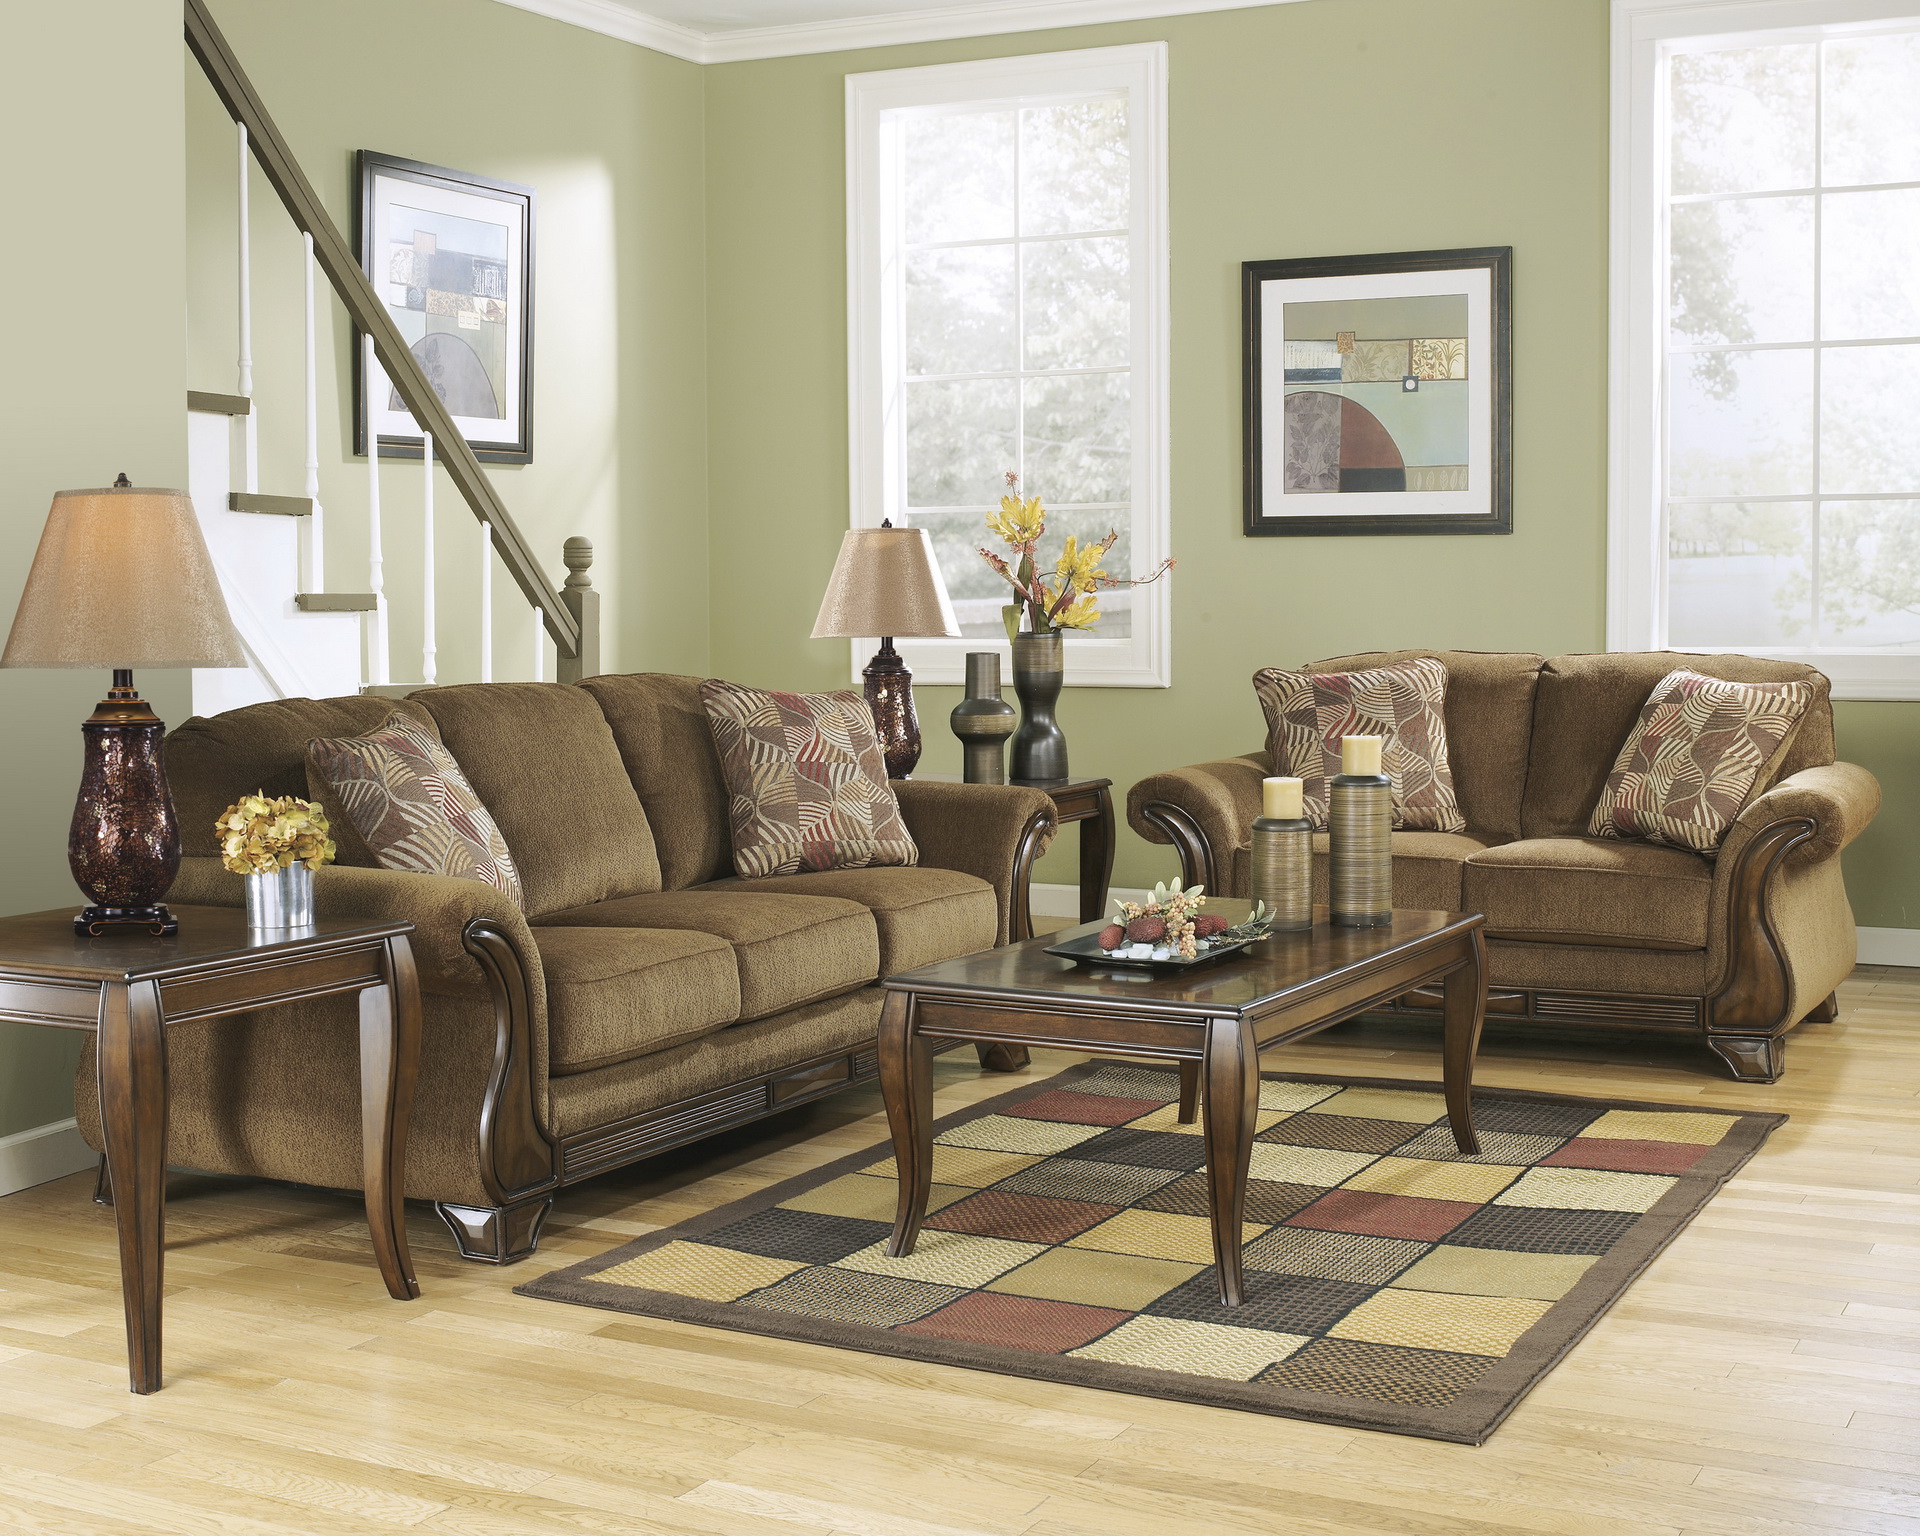 craughwell furniture living room furniture